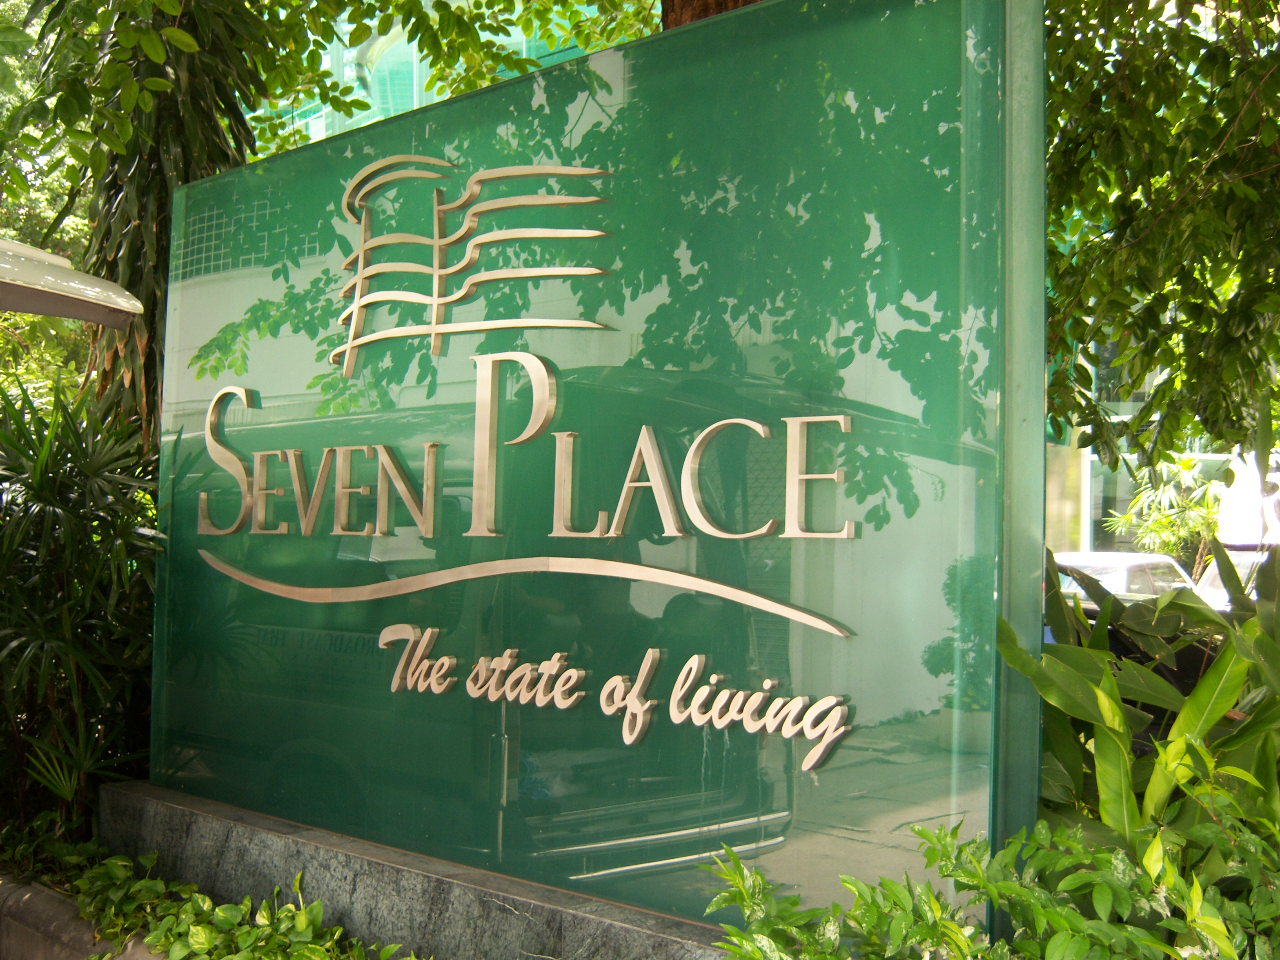 Seven Place Executive Residences